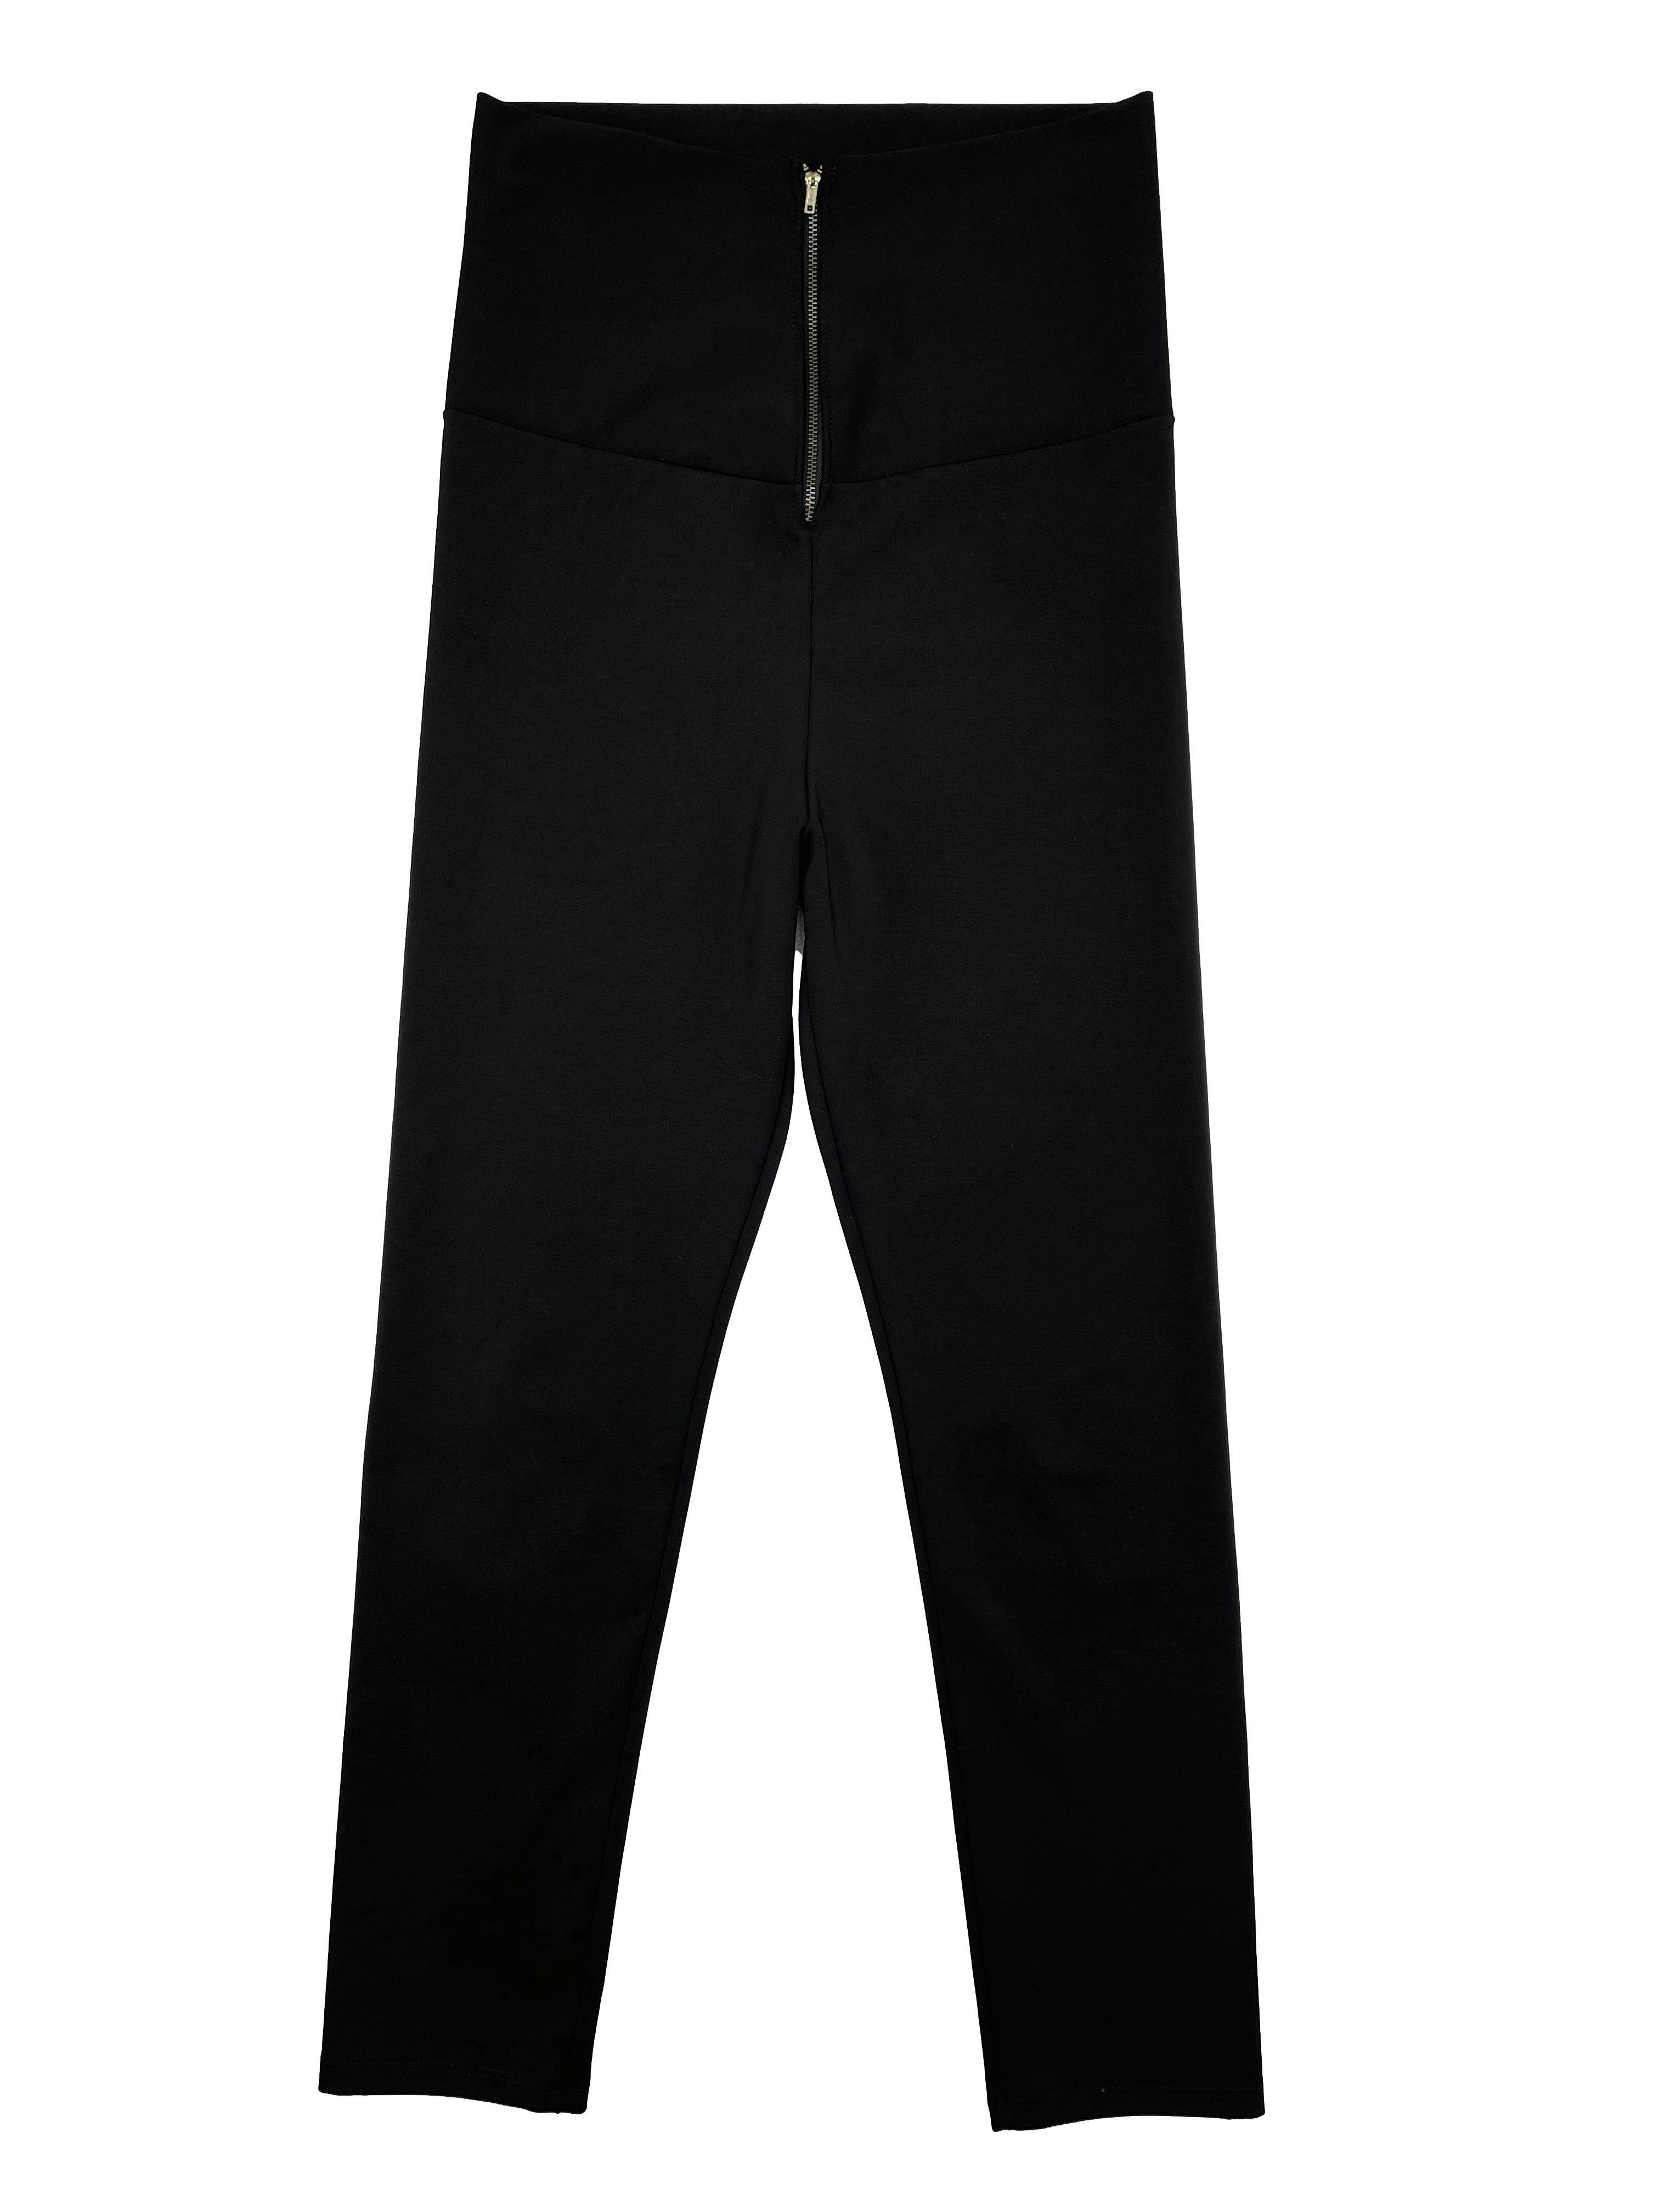 Pantalón negro de tiro alto con cierre delantero, tela gruesa ligeramente stretch. Cintura 68cm, Tiro 40cm, Largo 100cm